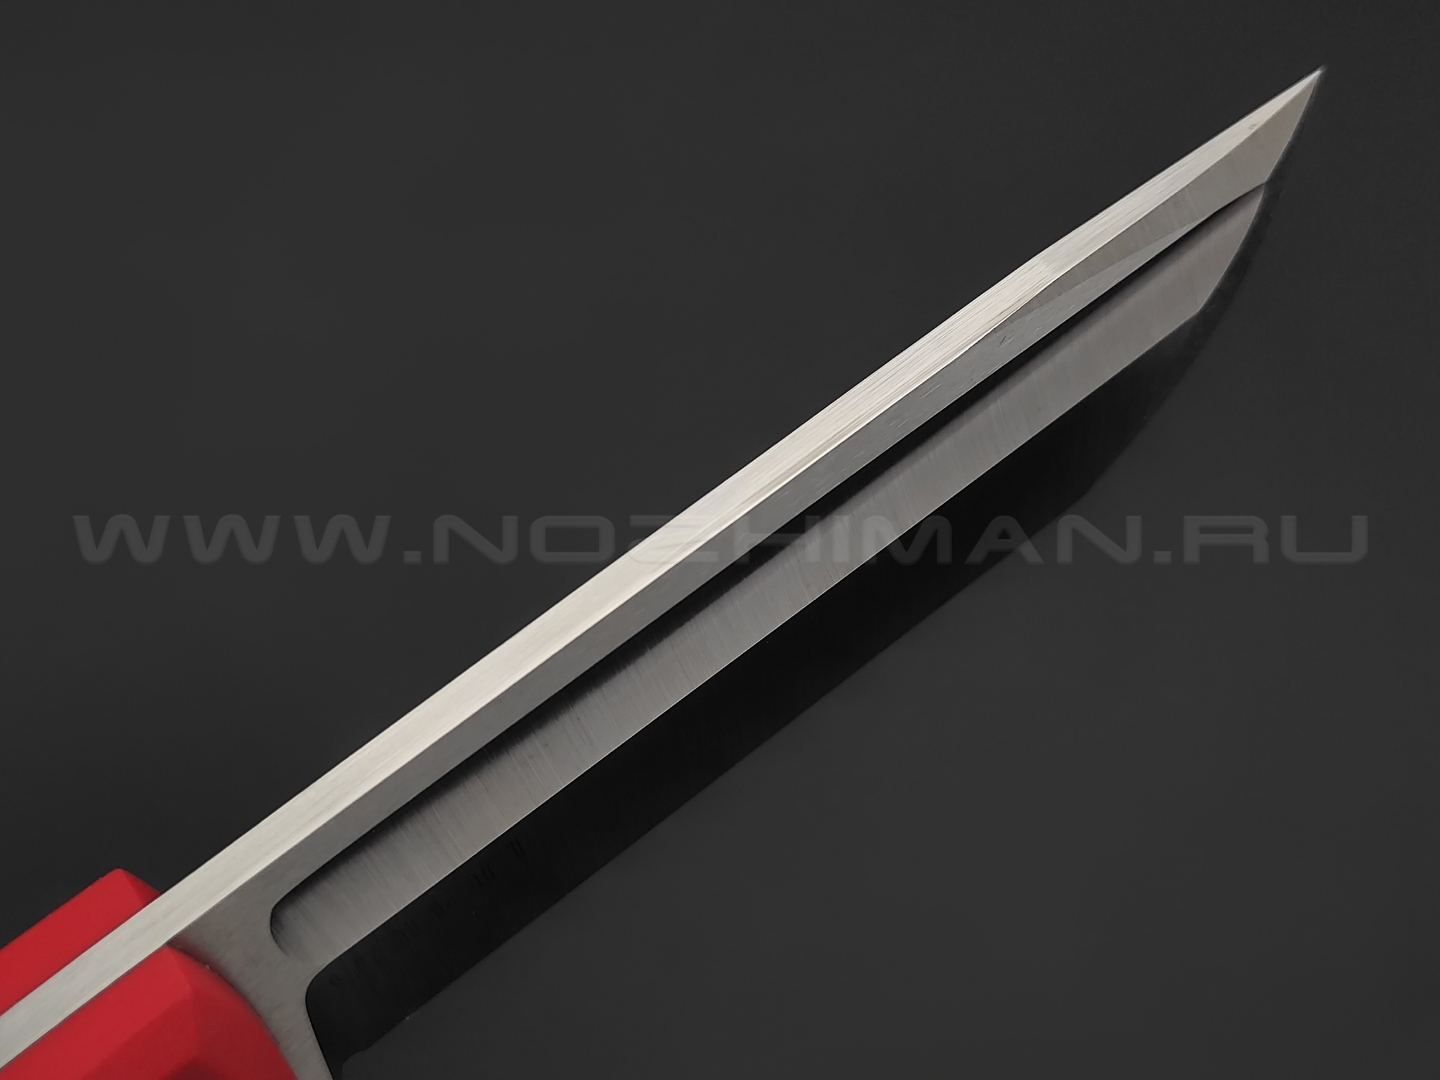 Нож Yanari средний сталь VG-10, рукоять G10 red, ножны kydex red